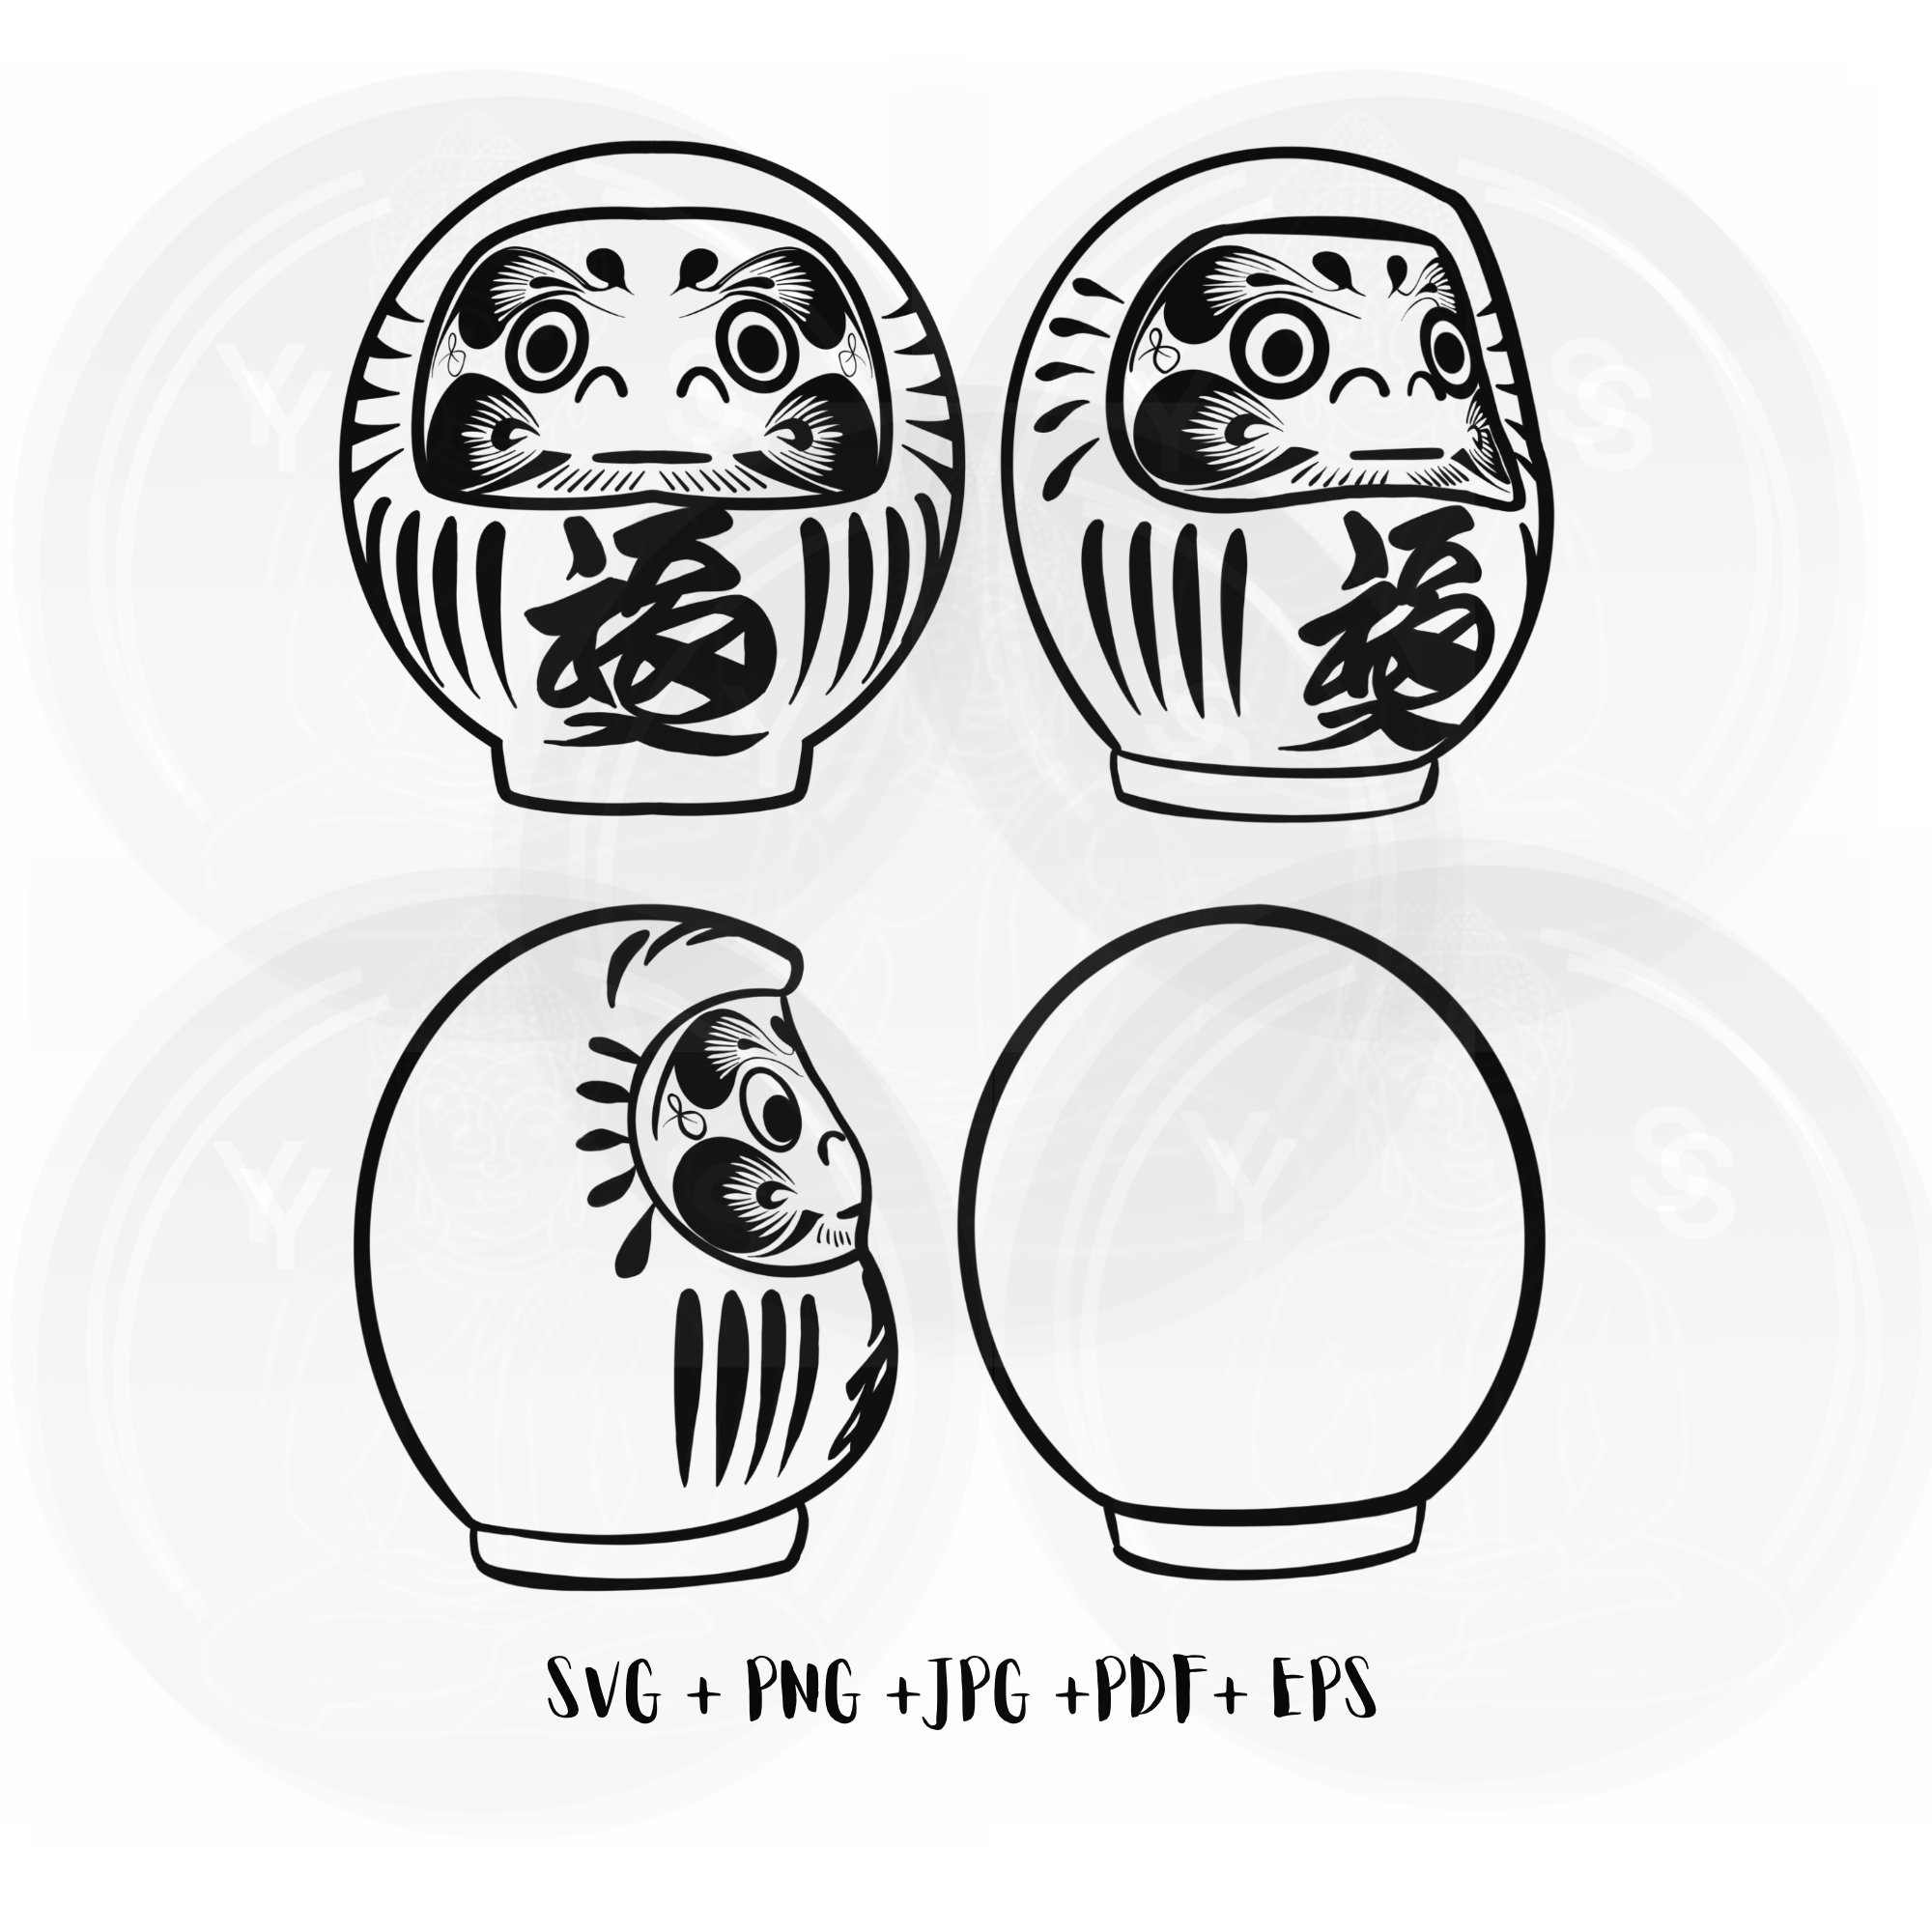 Daruma Doll Icon Funny Classical Symmetric Shape Design Stock Illustration  - Download Image Now - iStock